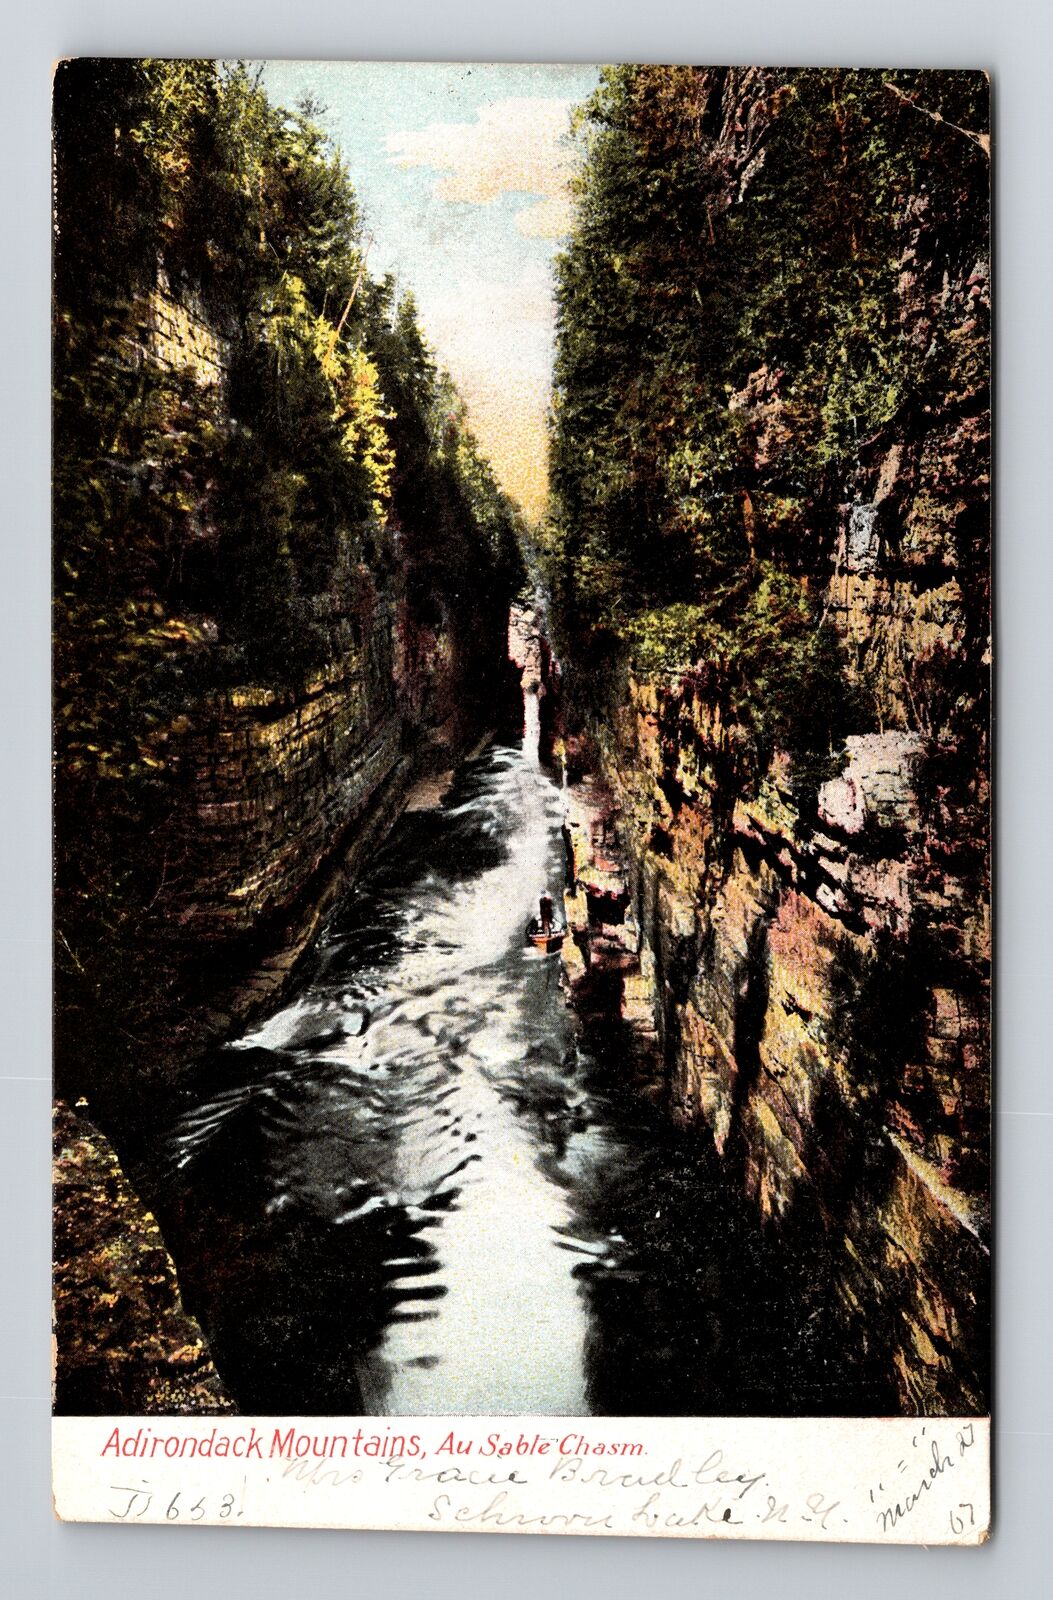 Adirondack Mountains NY-New York, Au Sable Chasm, Vintage Postcard